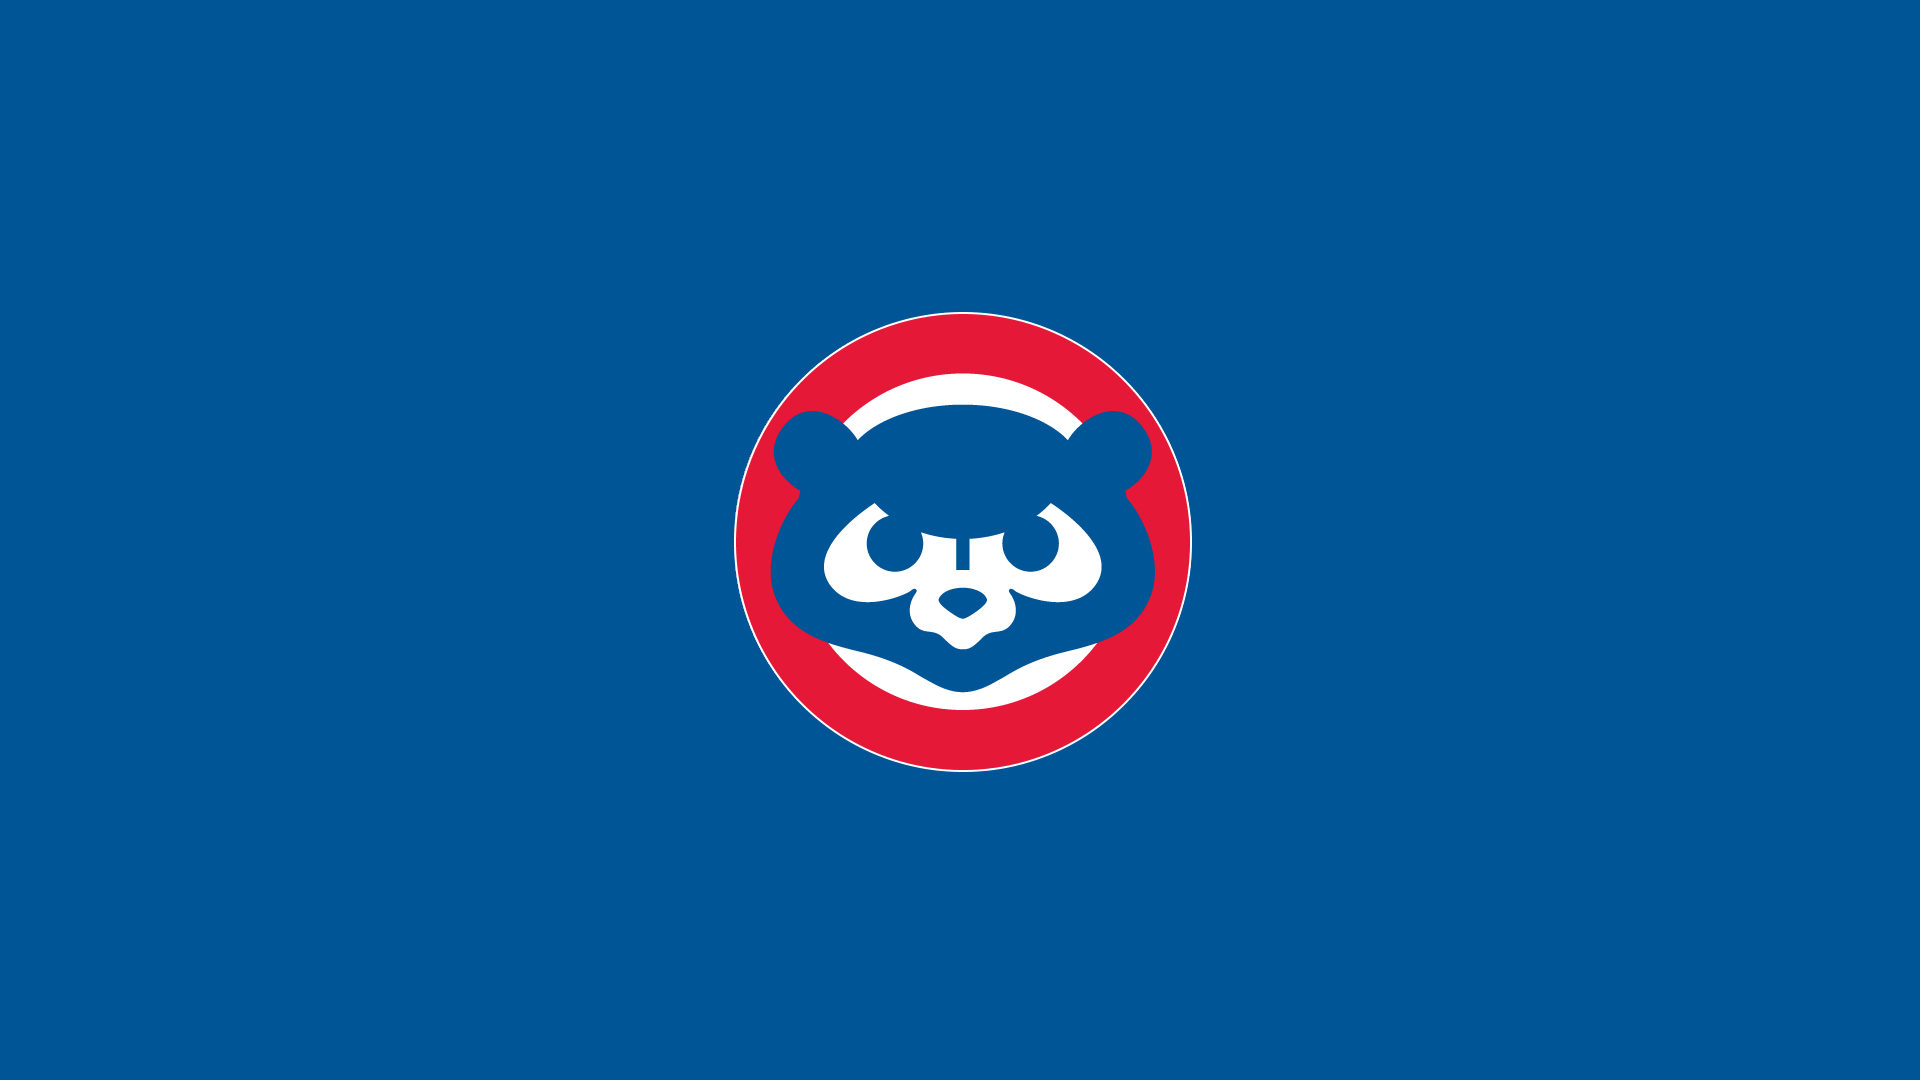 Cubs Wallpaper for your Desktop Chicago Cubs 1920x1080